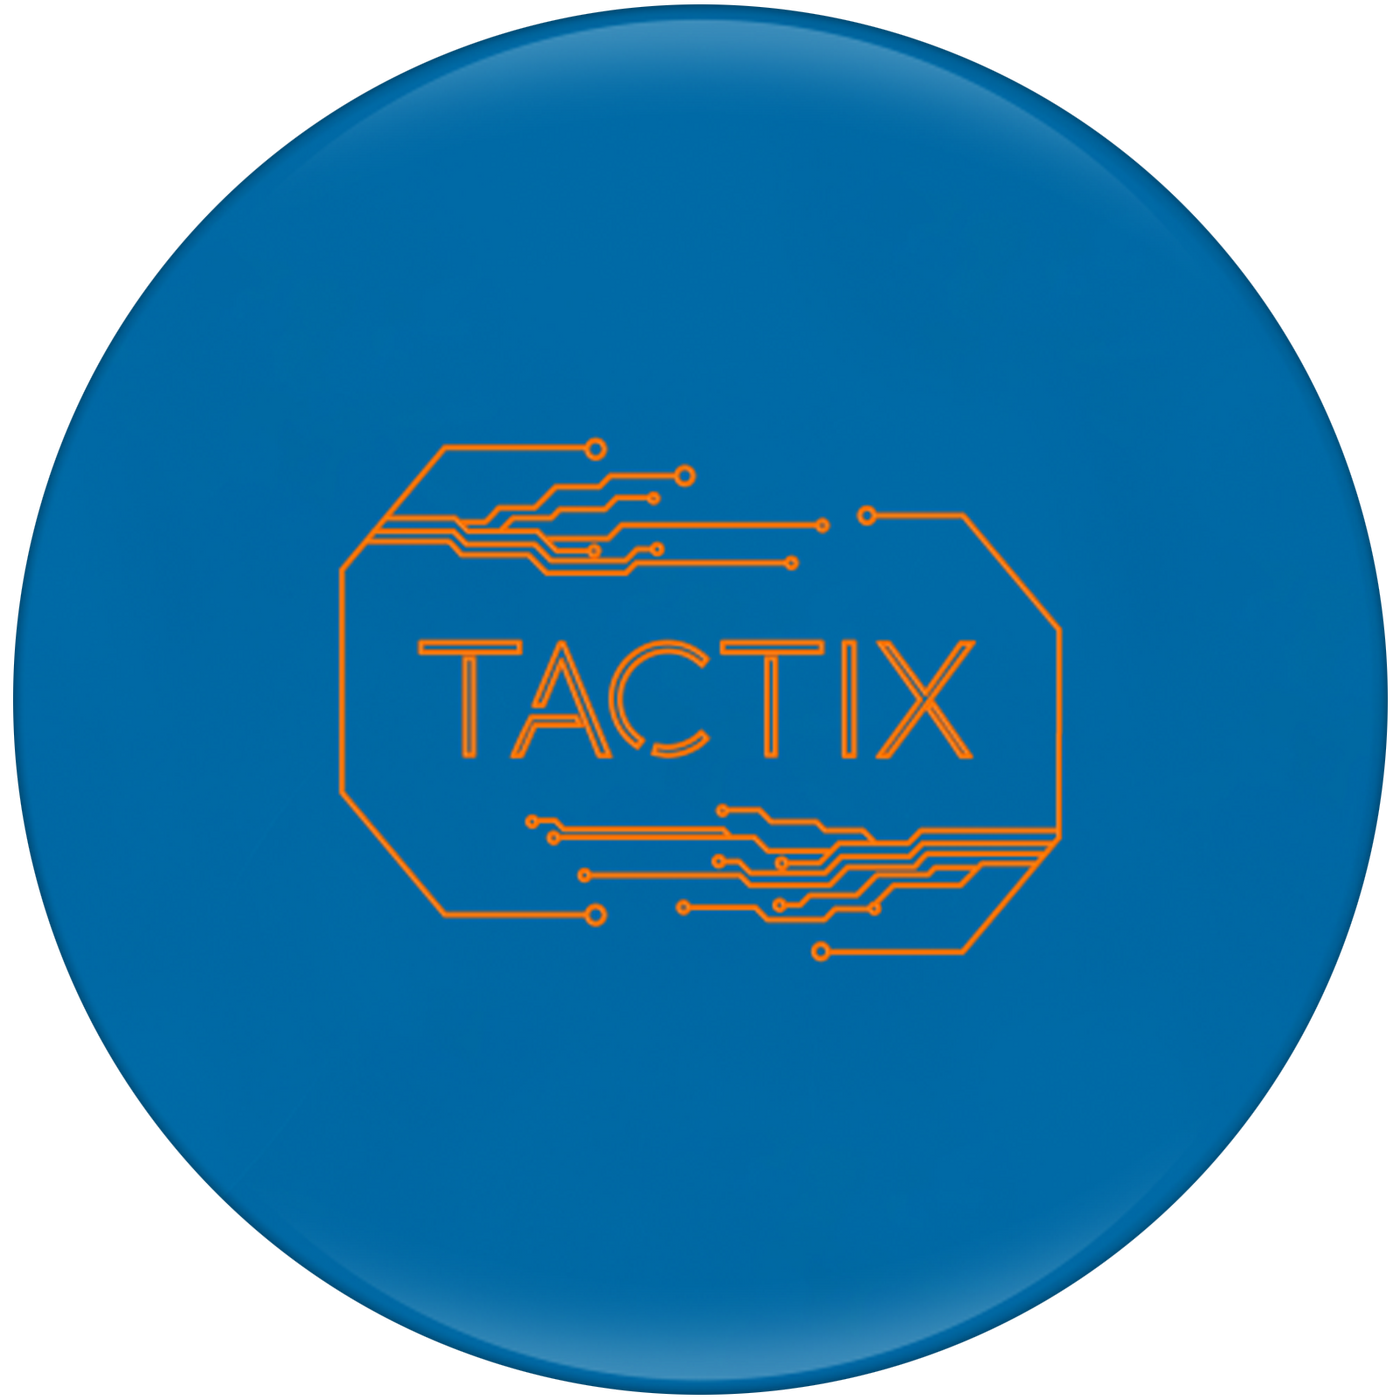 Tactix Bowling Ball